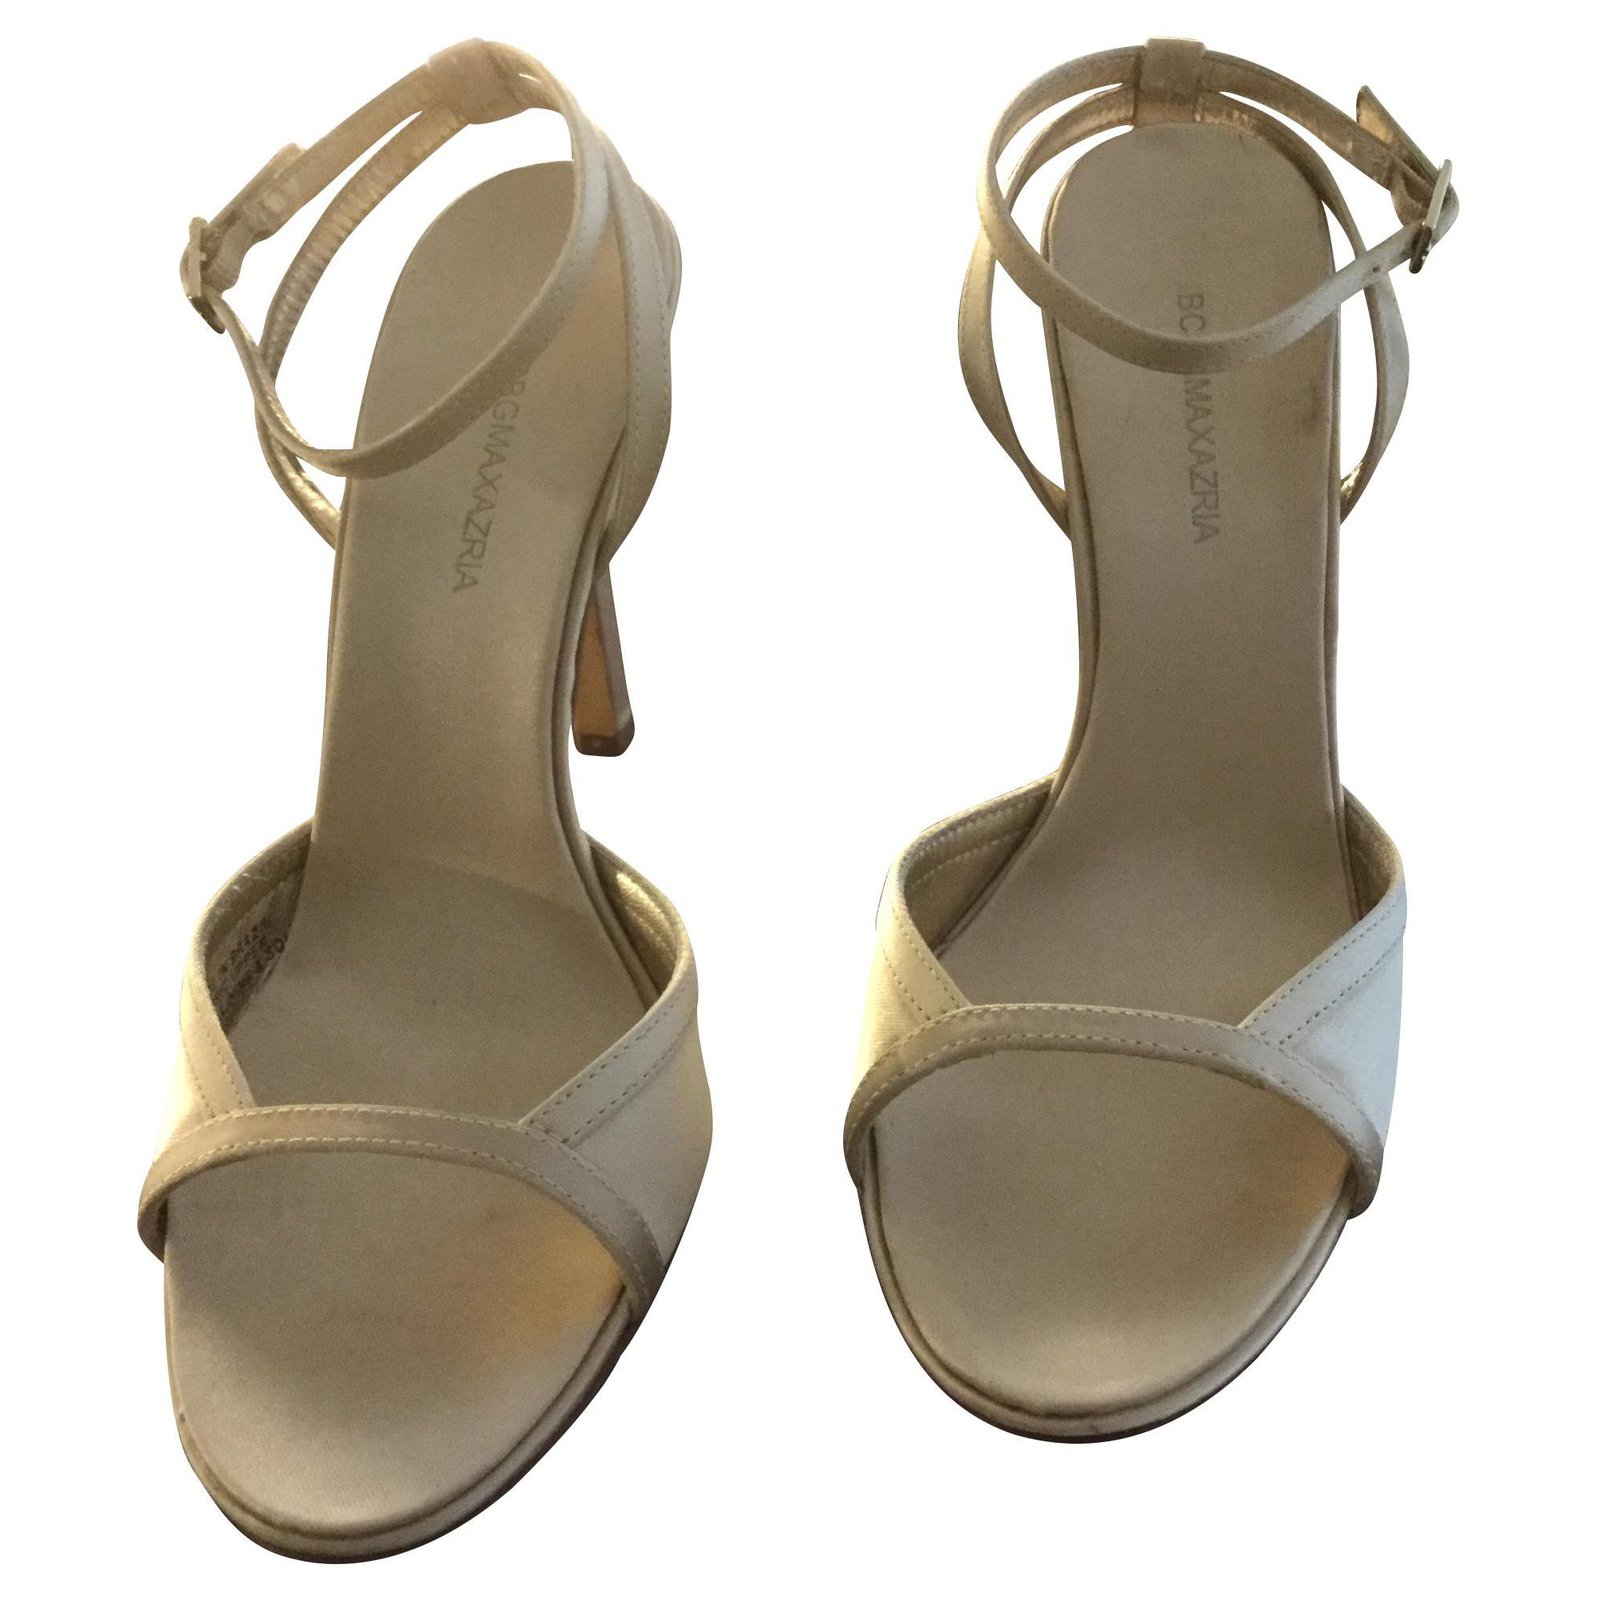 BCBG Women's Beverly Sandal - Beige | Discount BCBG Shoes/Sandals & More -  Shoolu.com | Shoolu.com